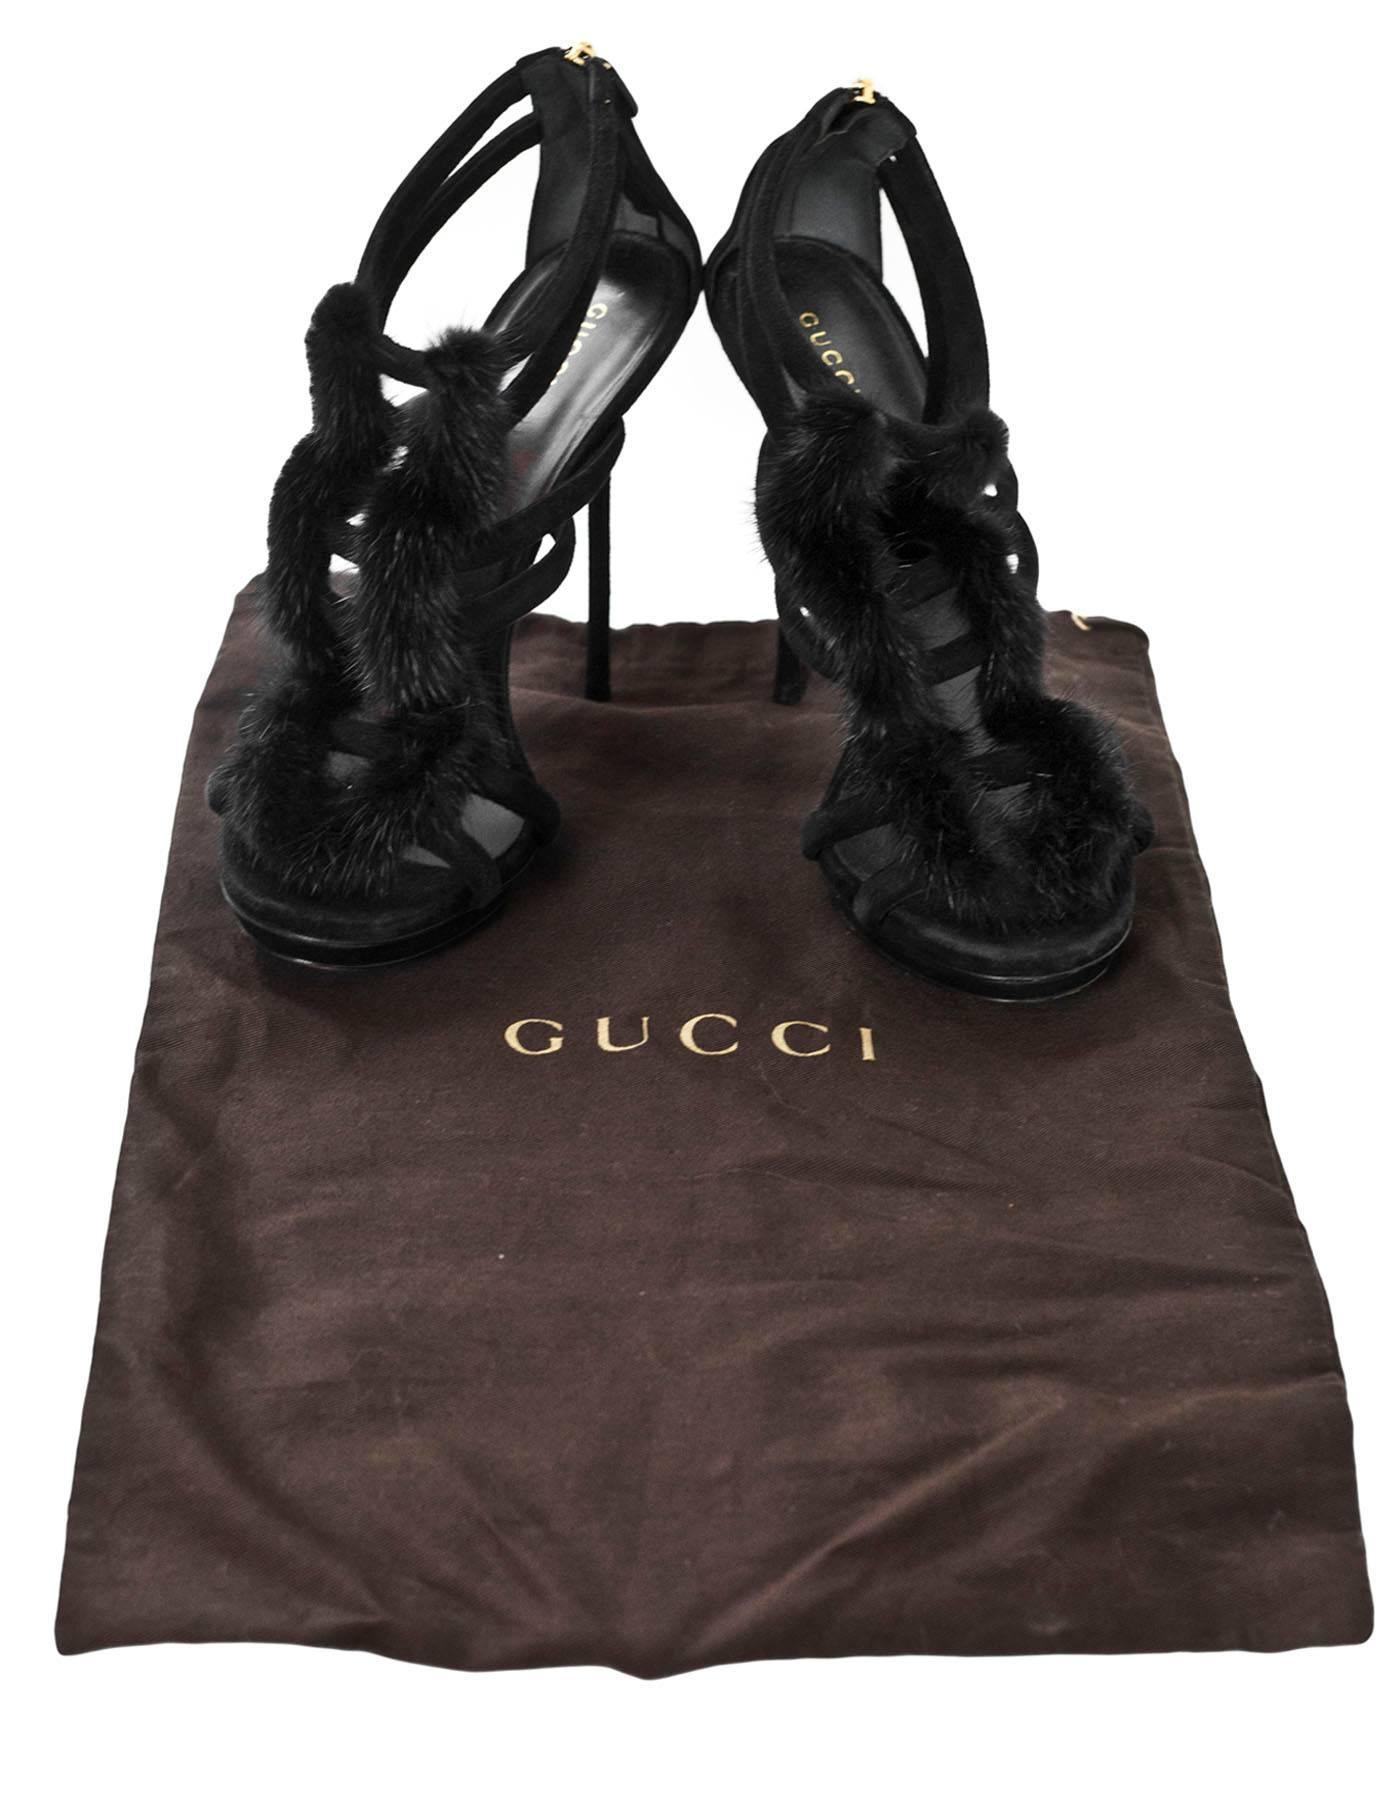 Gucci Black Suede & Mink Fur Strappy Sandals sz 40.5 2